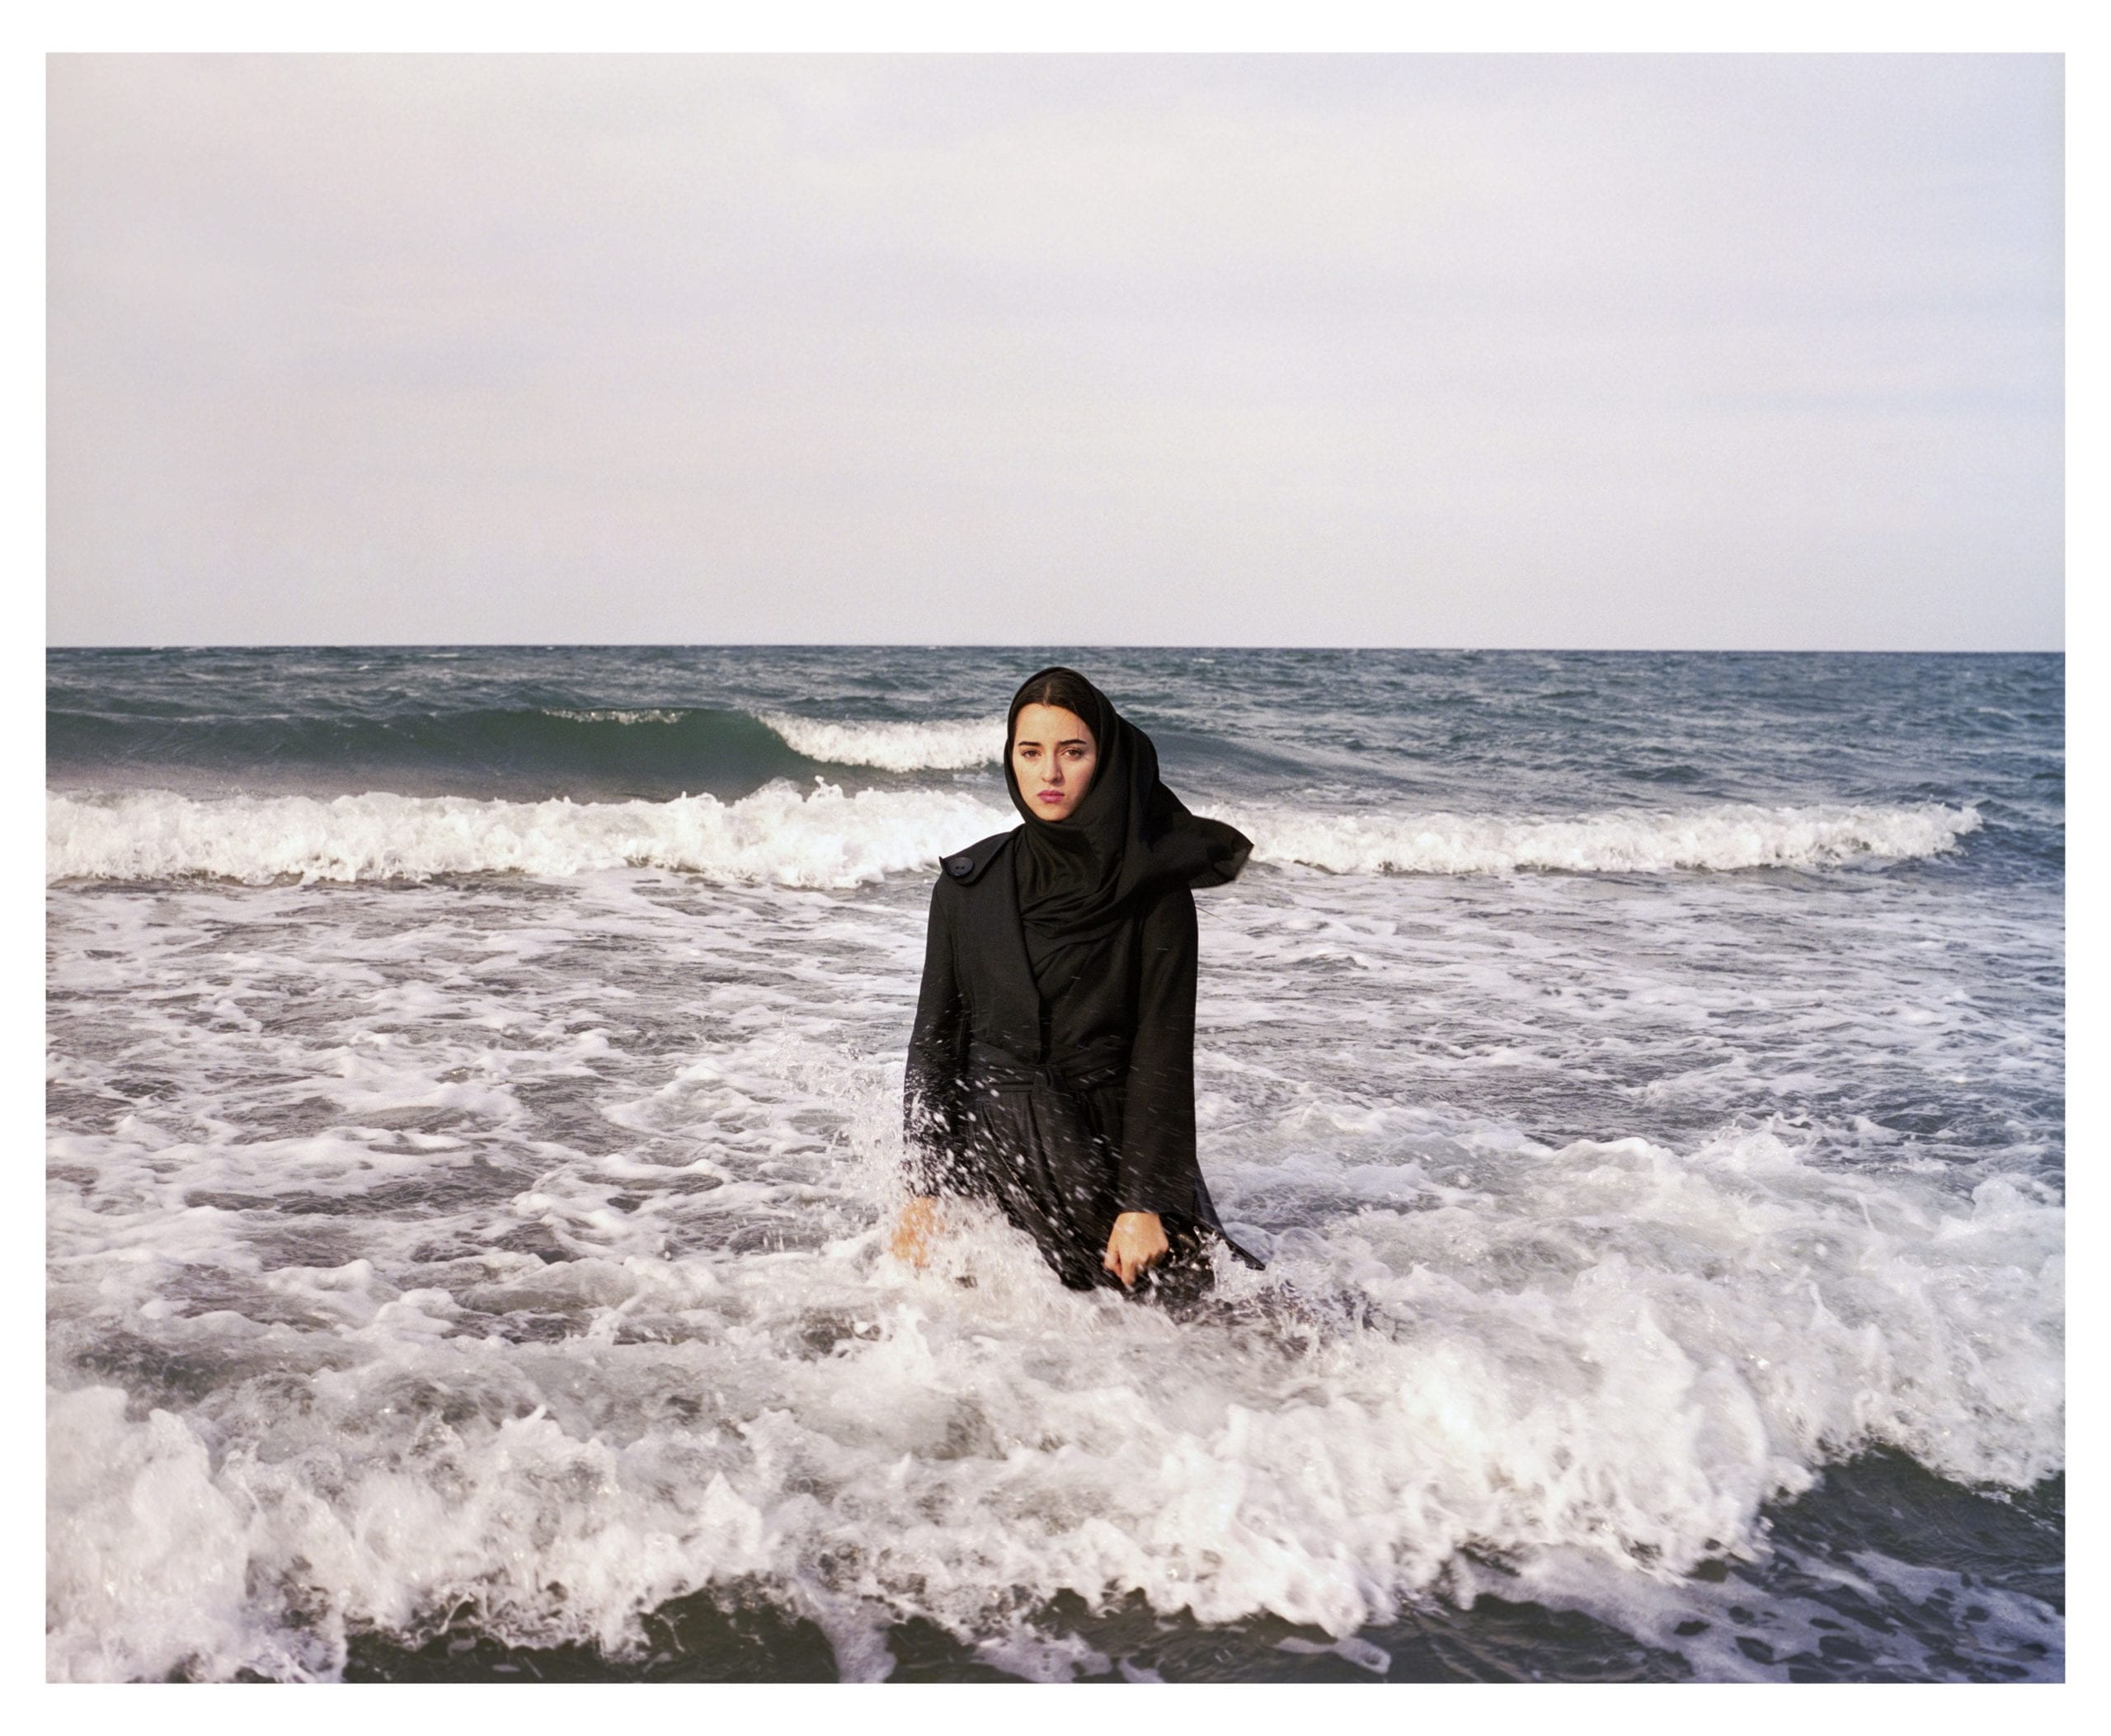 IRAN. Mahmoudabad. Caspian Sea. 2011. Imaginary CD cover for Sahar.